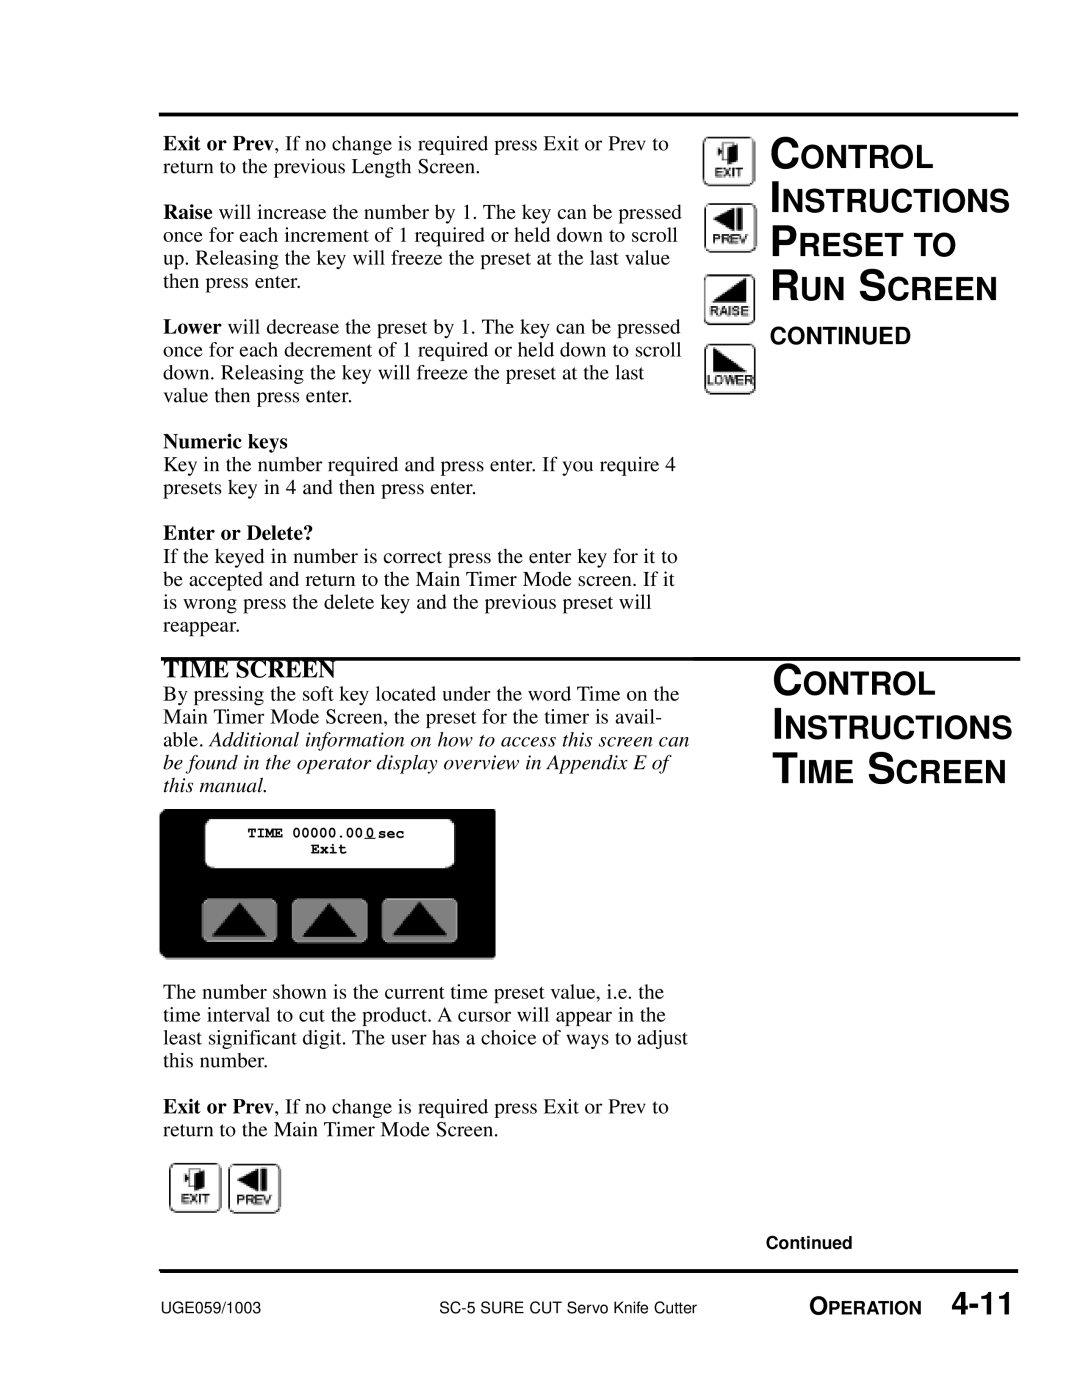 Conair SC-5 manual Control Instructions Time Screen, Control Instructions Preset To Run Screen, Continued, Numeric keys 